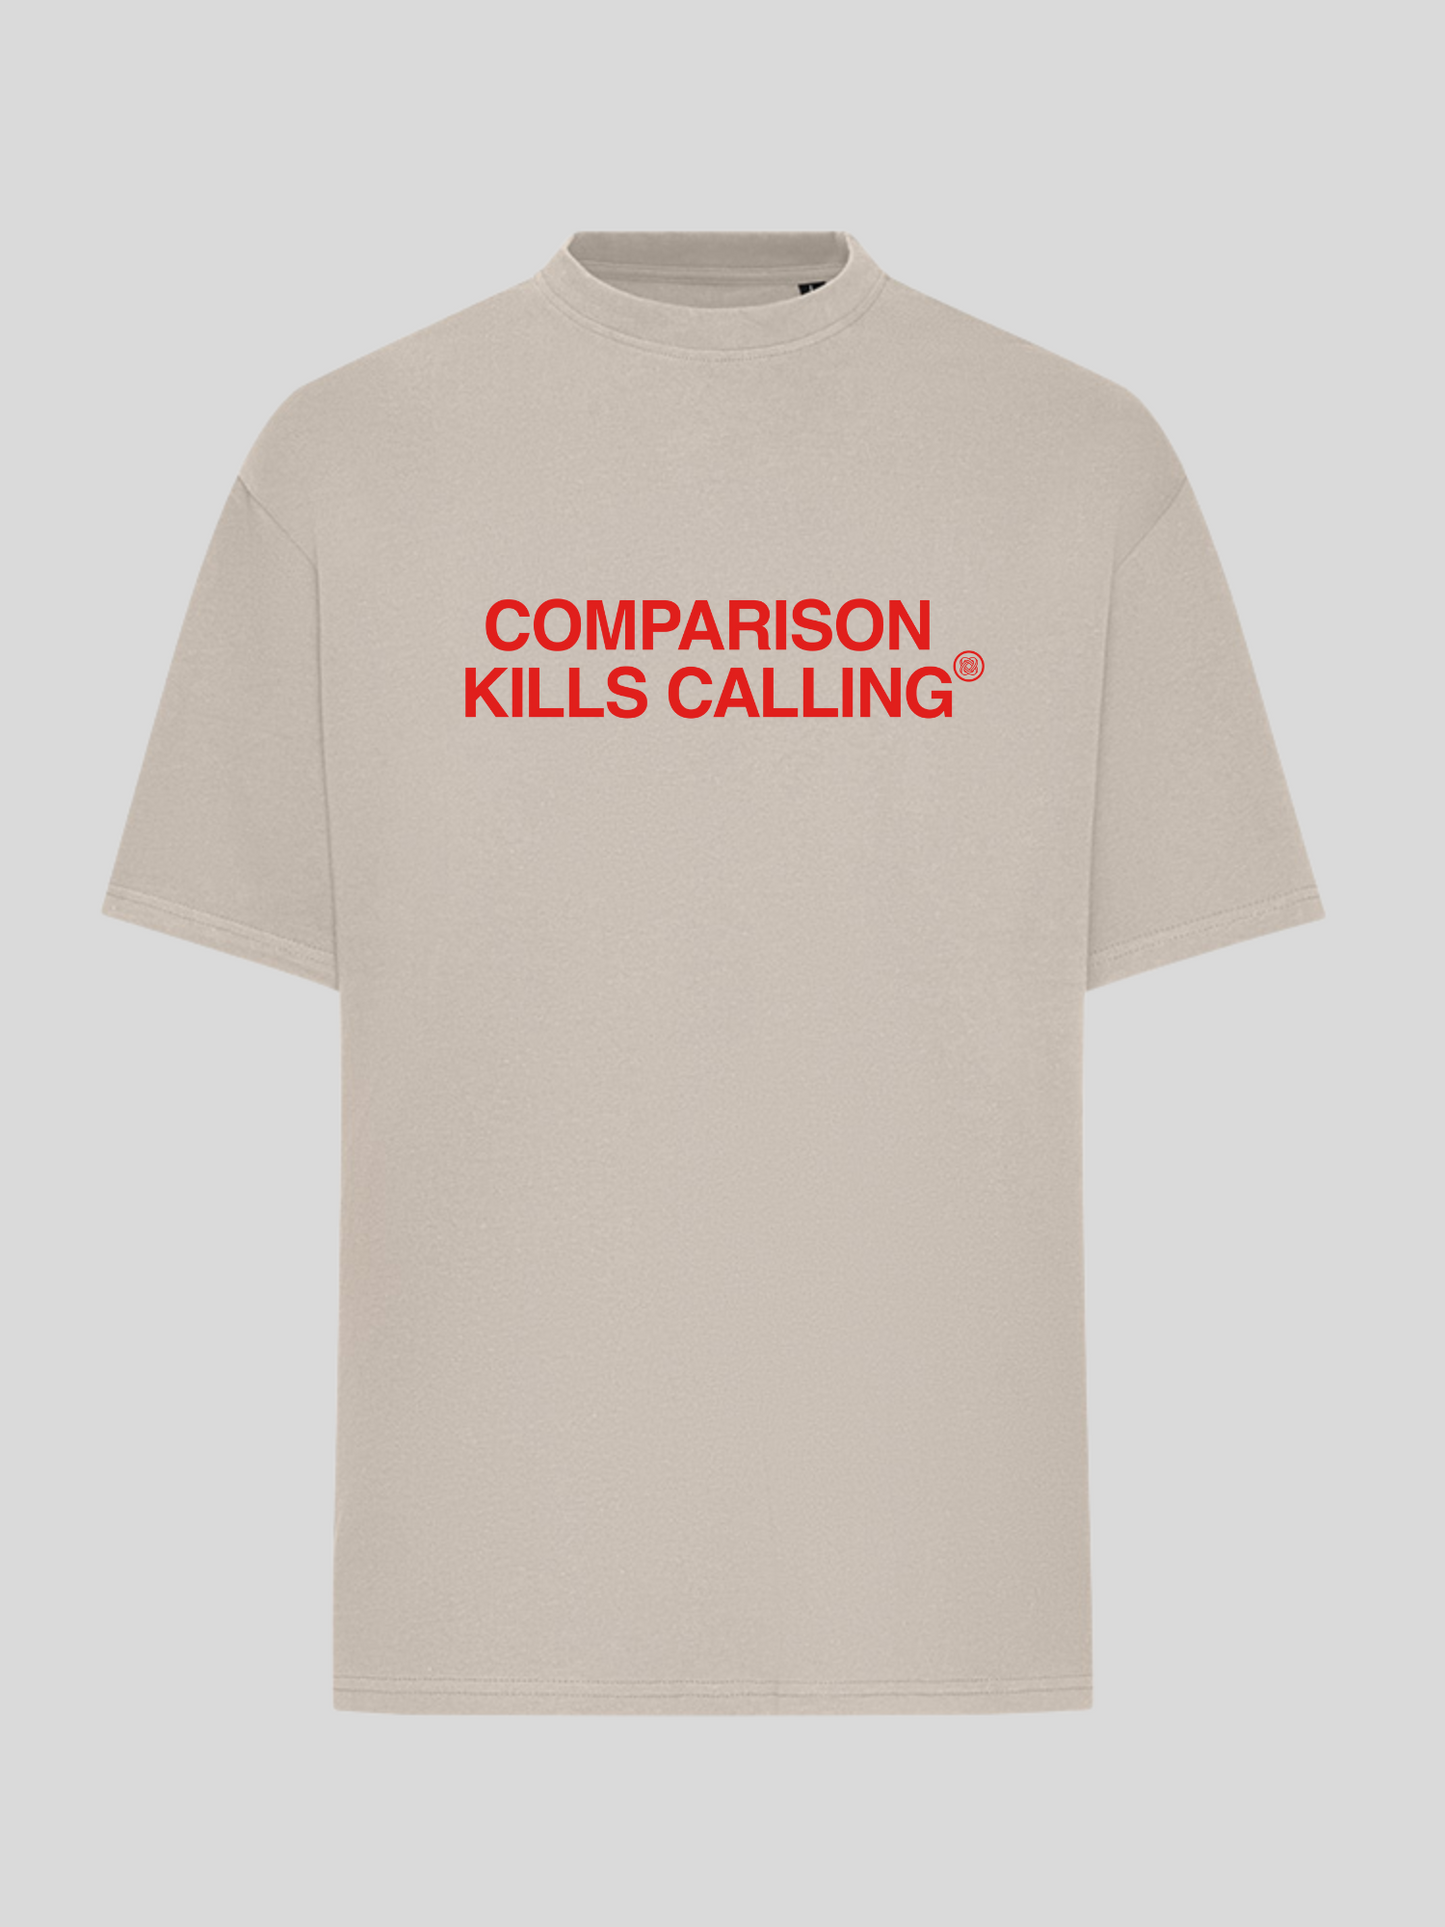 COMPARISON KILLS CALLING - Shirt